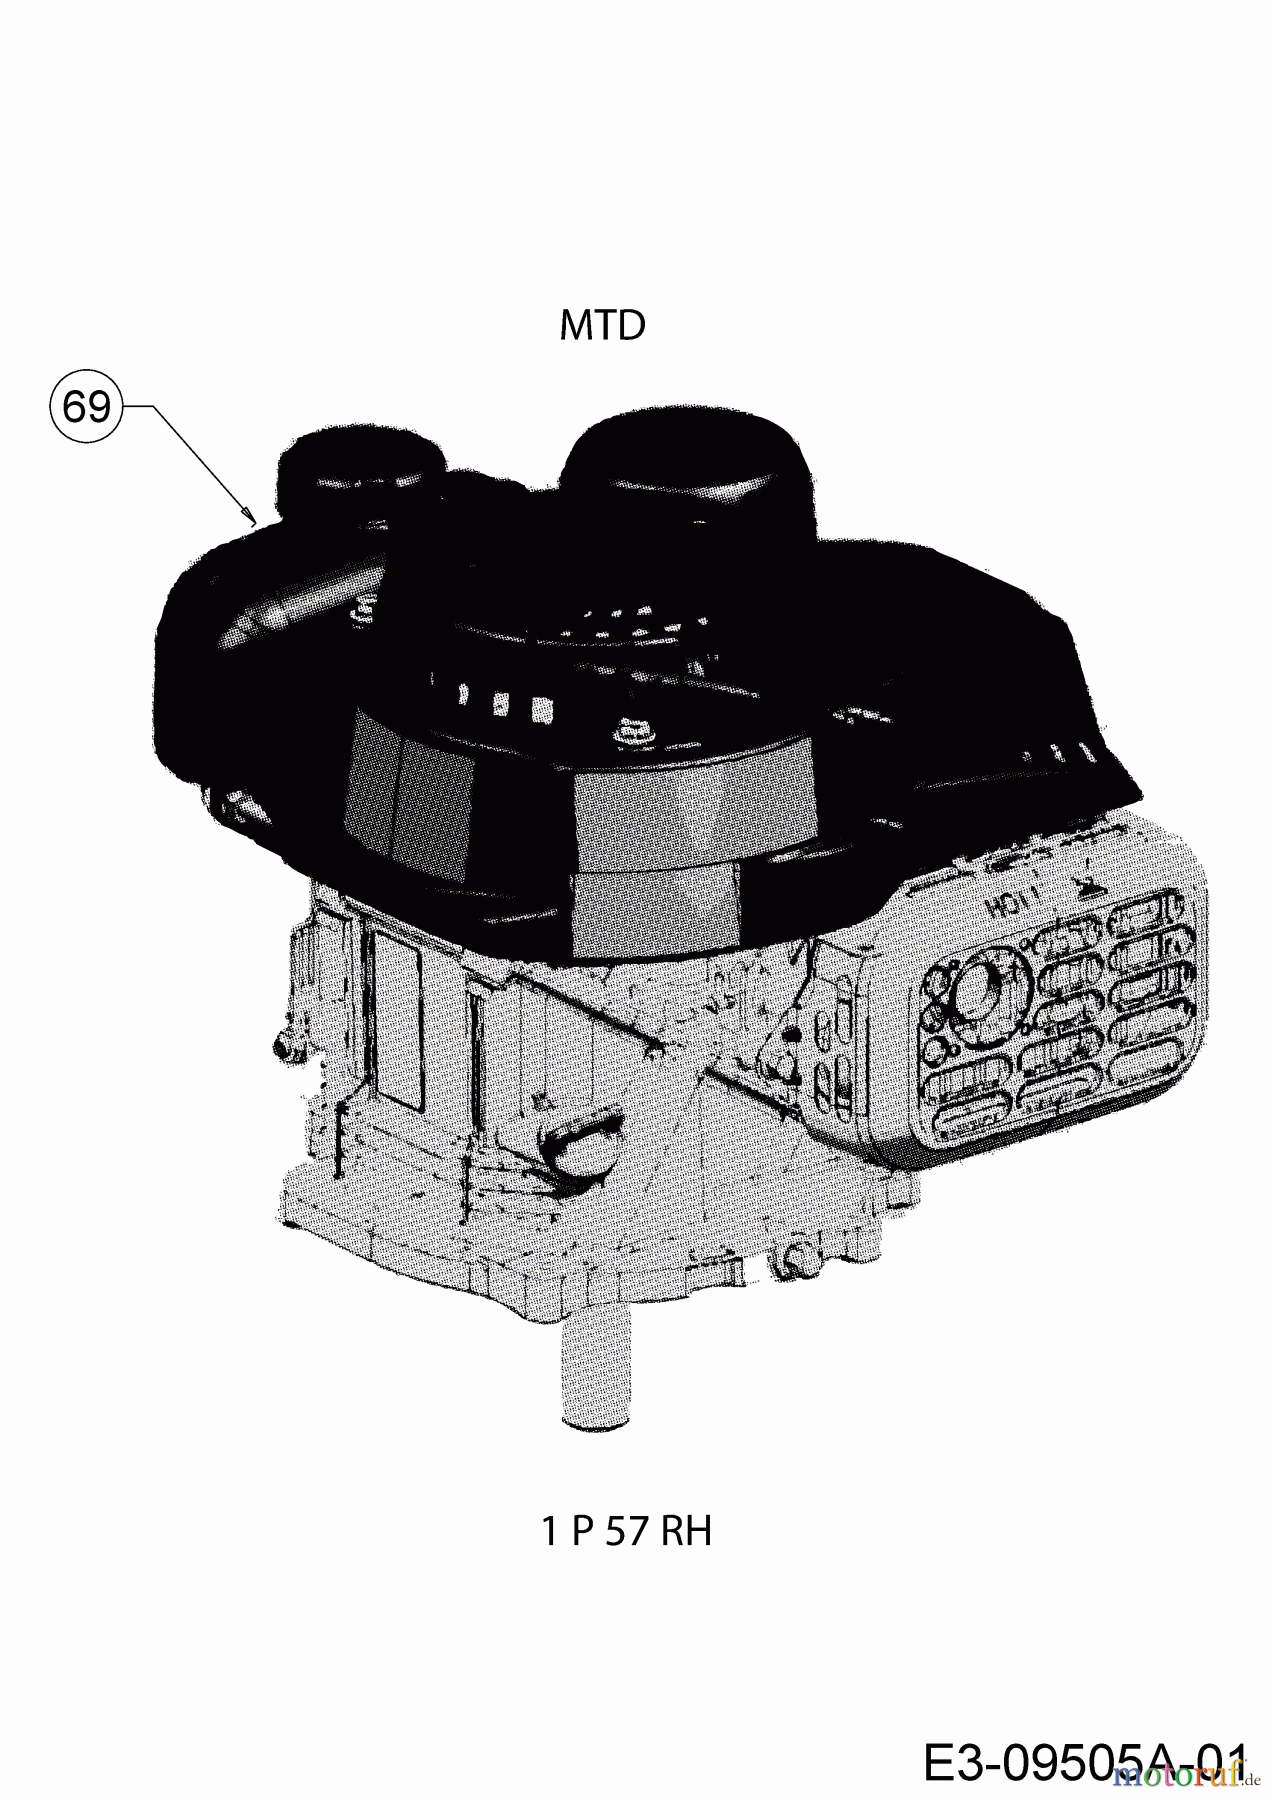  MTD Motormäher Smart 46 PO 11C-TASJ600 (2019) Motor MTD